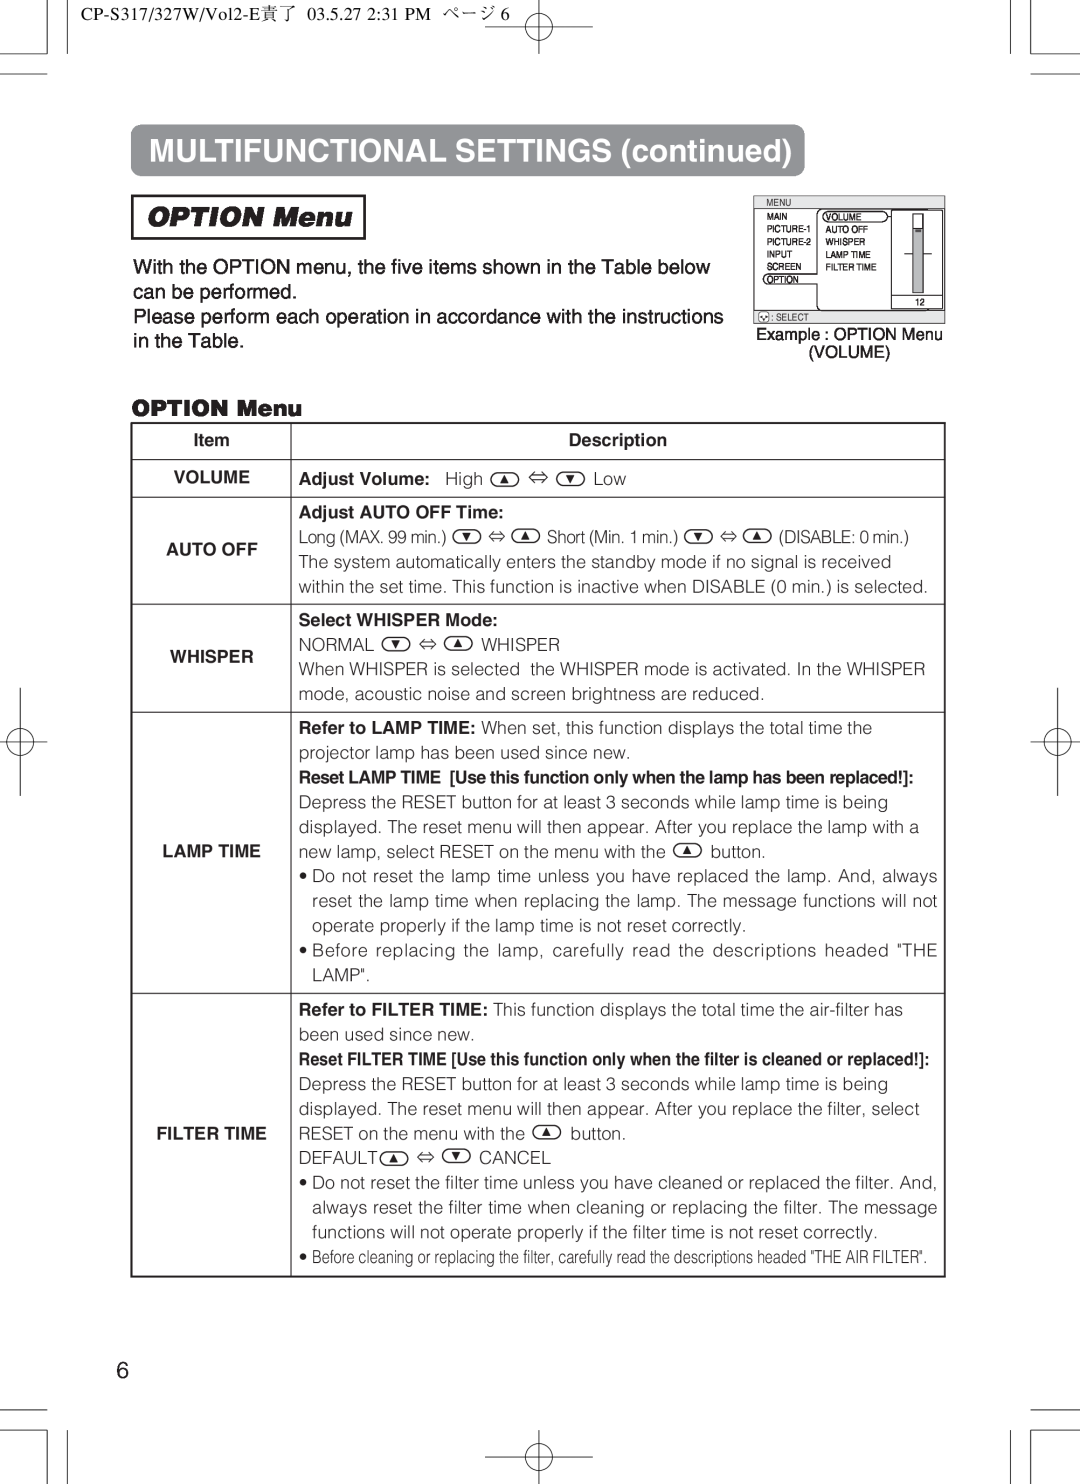 Hitachi cp-s318 user manual OPTION Menu, MULTIFUNCTIONAL SETTINGS continued 